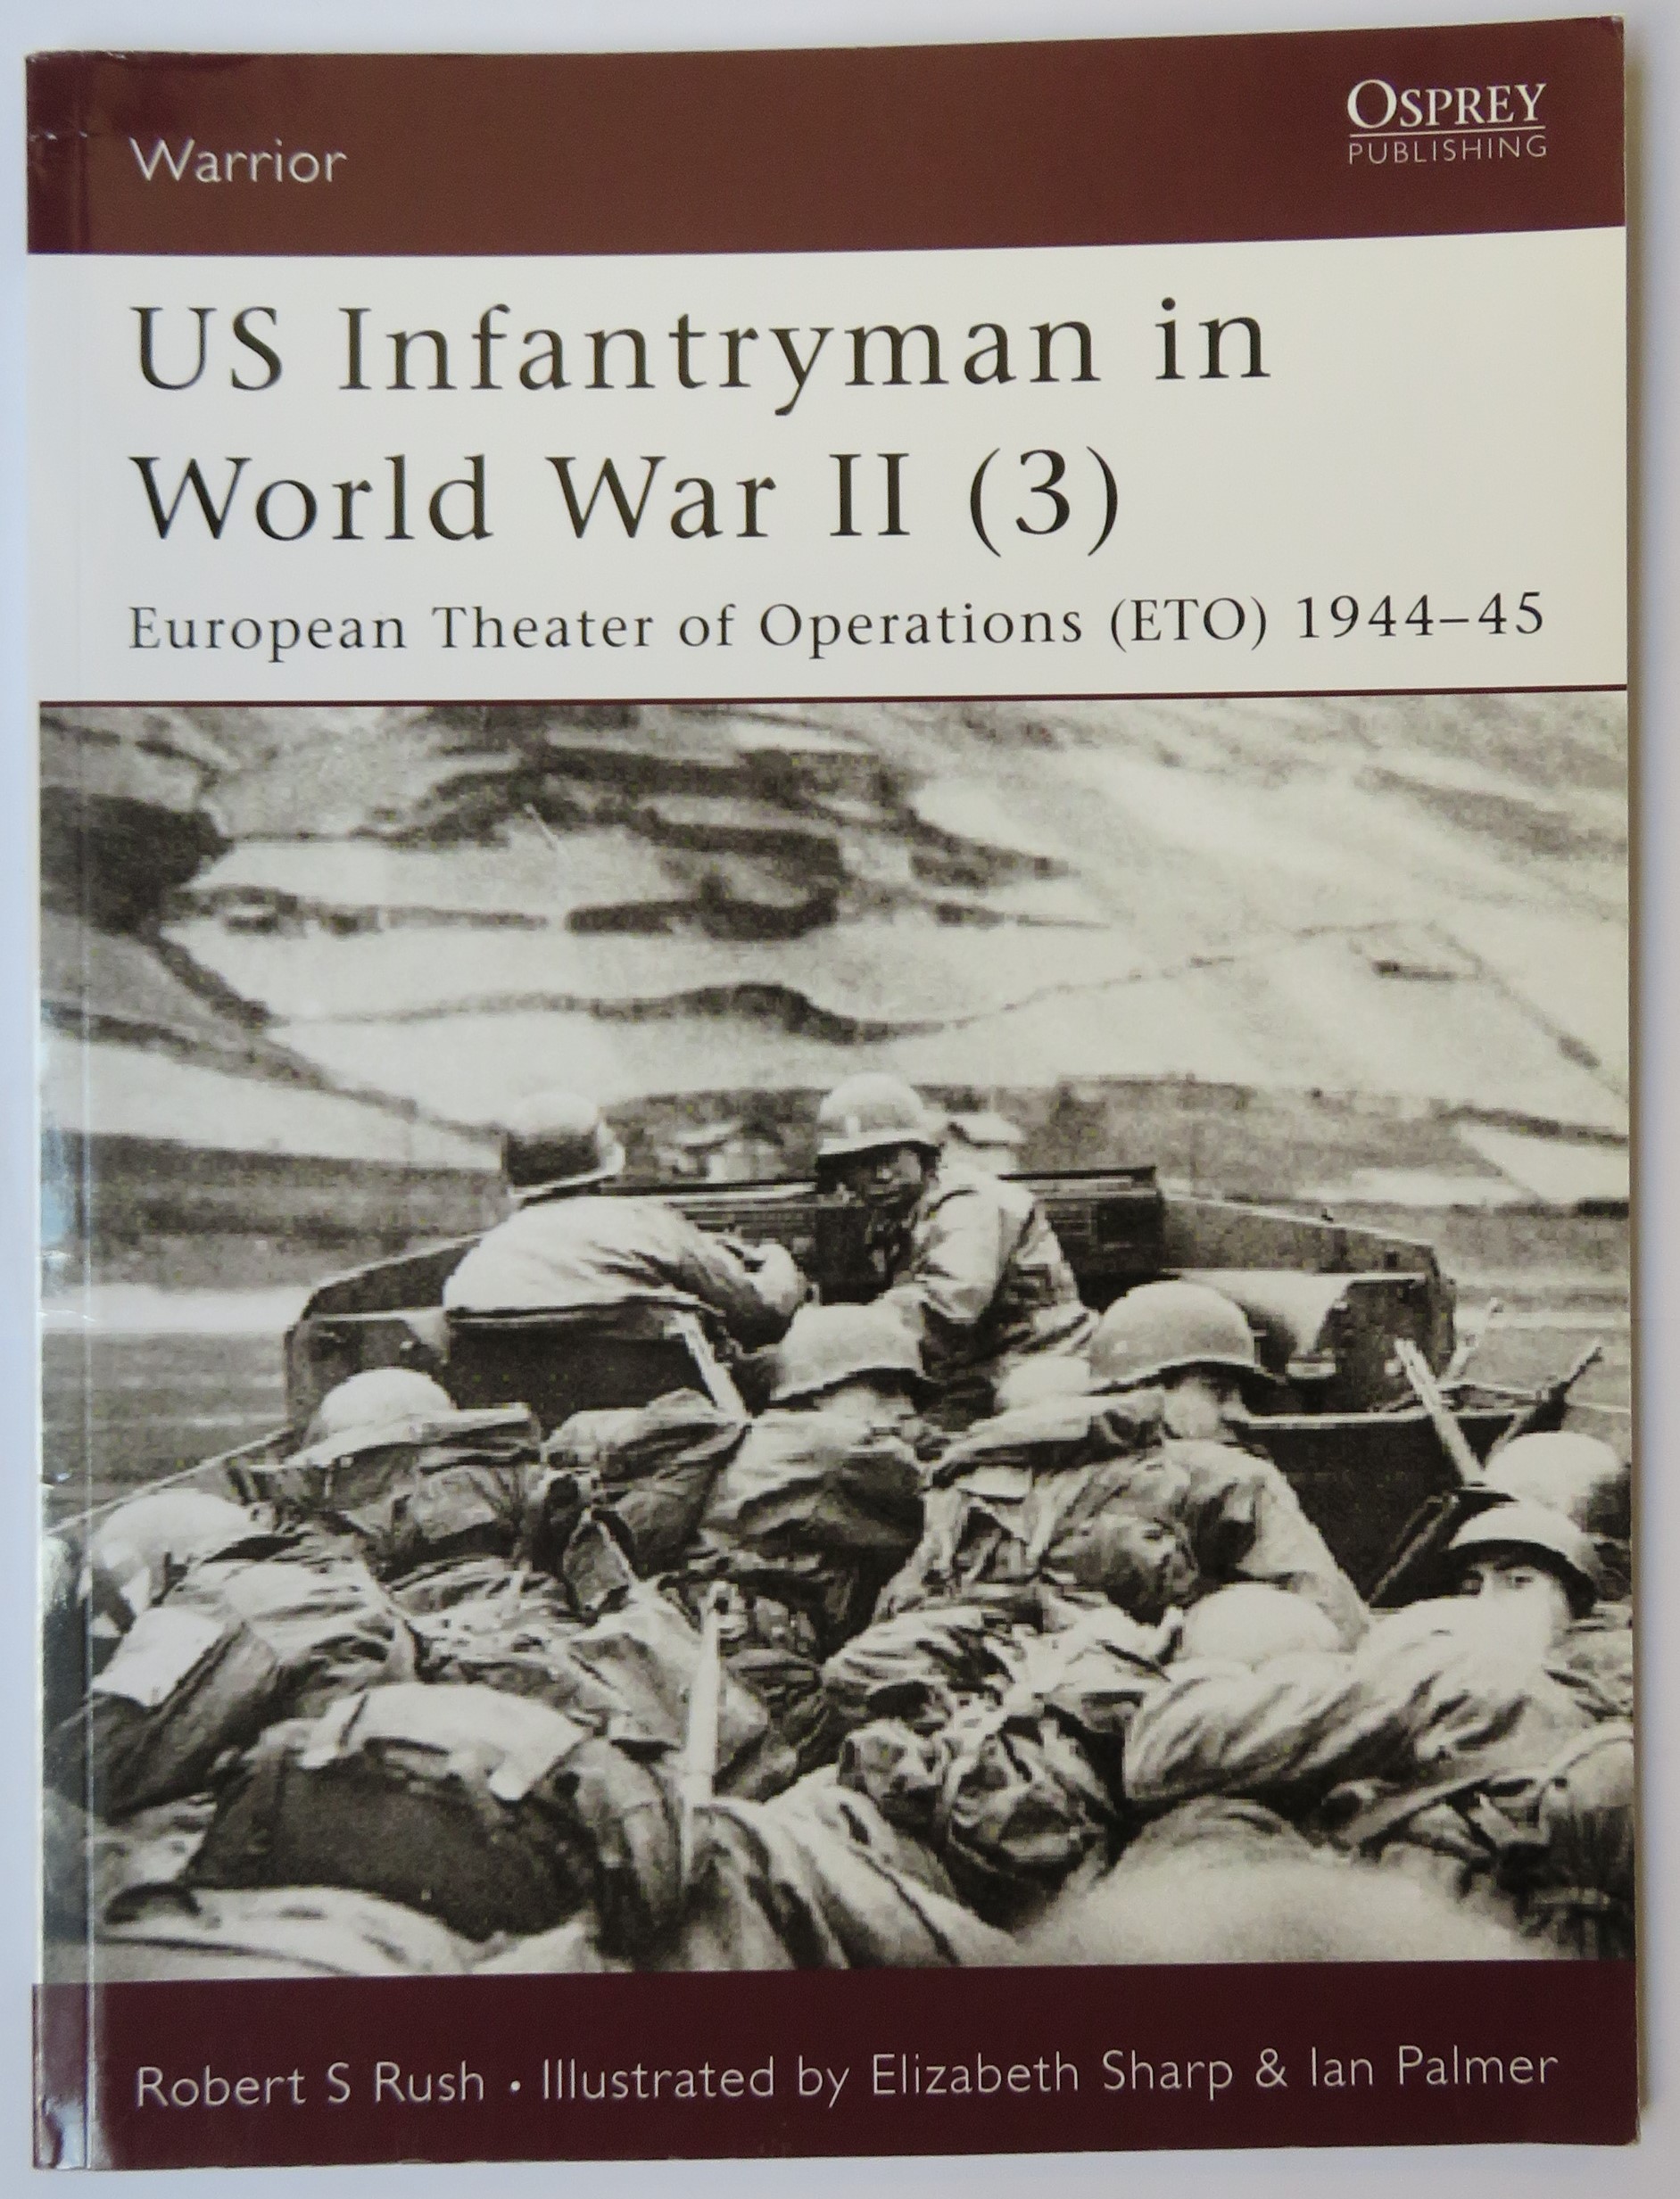 Warrior 56 US Infantryman in World War II (3) European Theatre of Operations (ETO) 1944-45